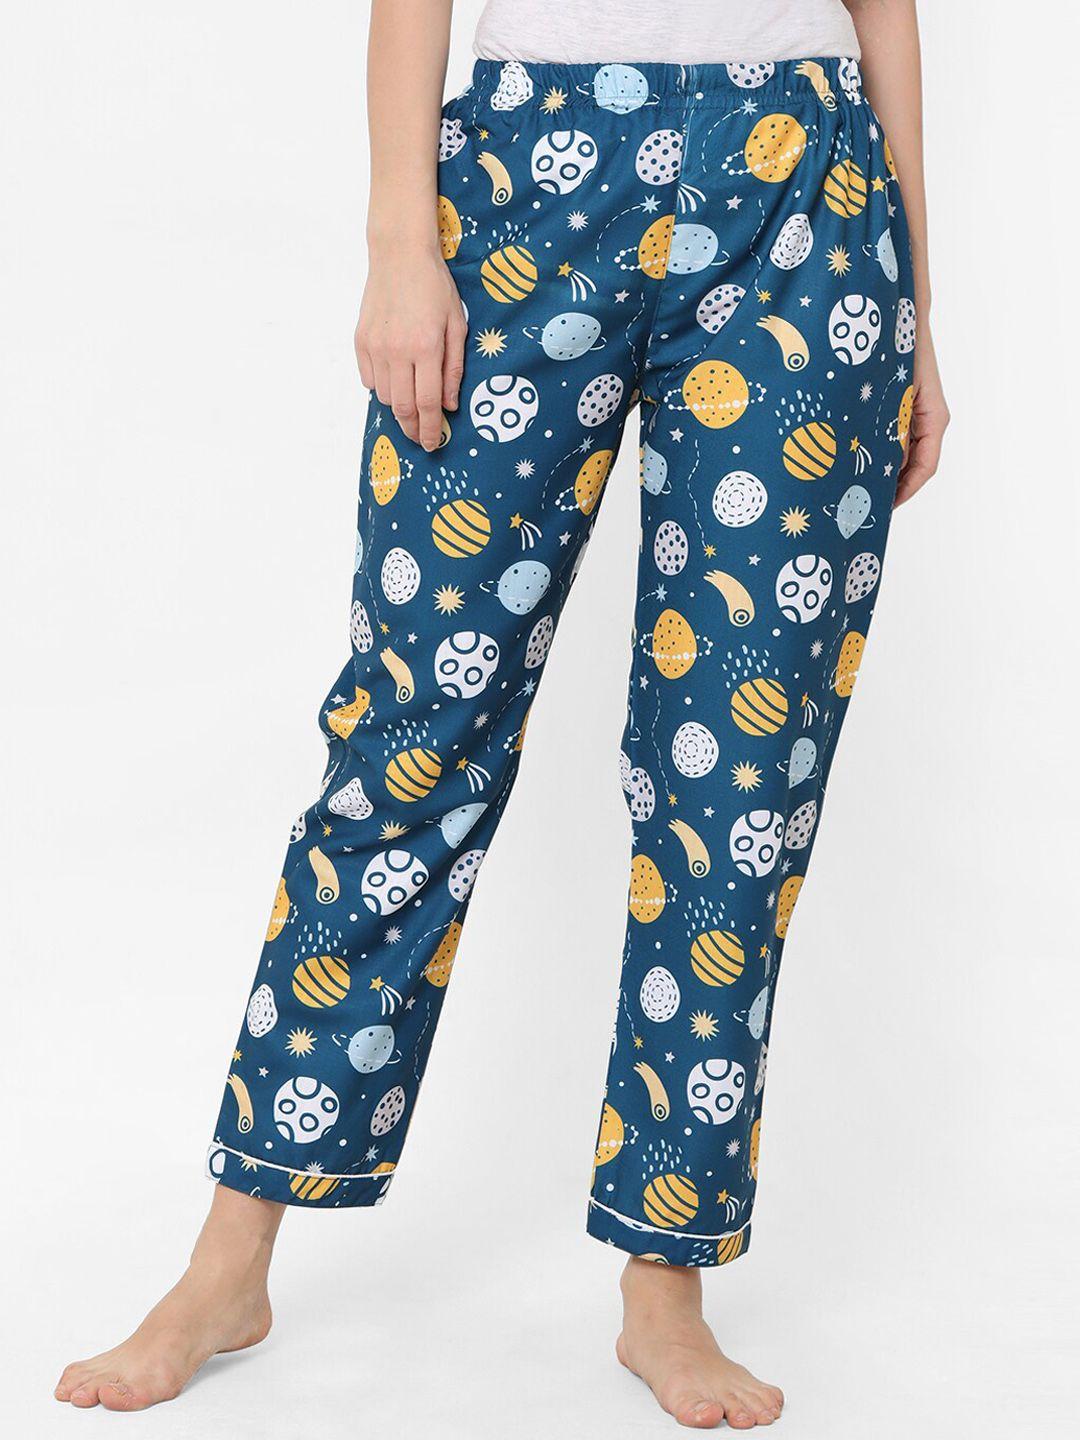 fashionrack women teal blue galaxy printed cotton lounge pants